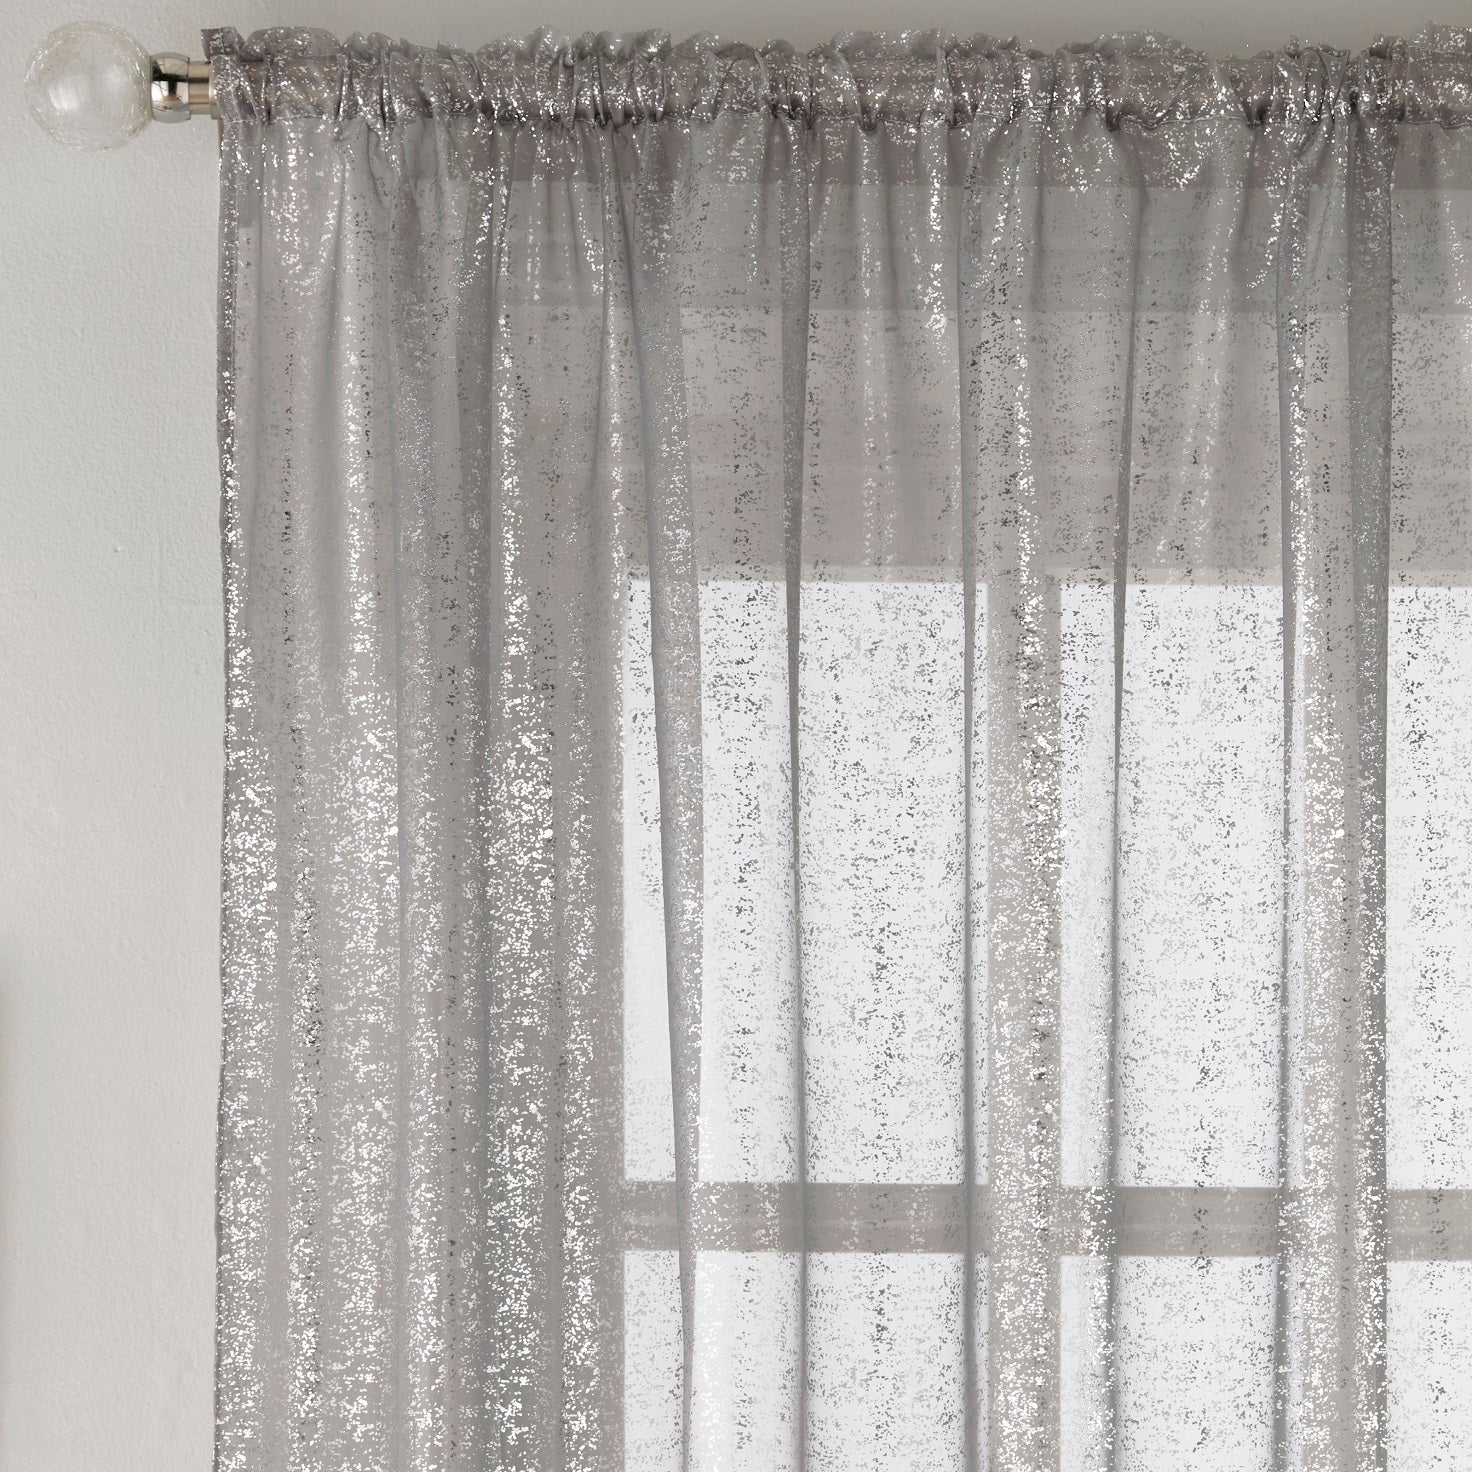 55x72" Pandora Voile Net Curtains Panel - Grey & Silver